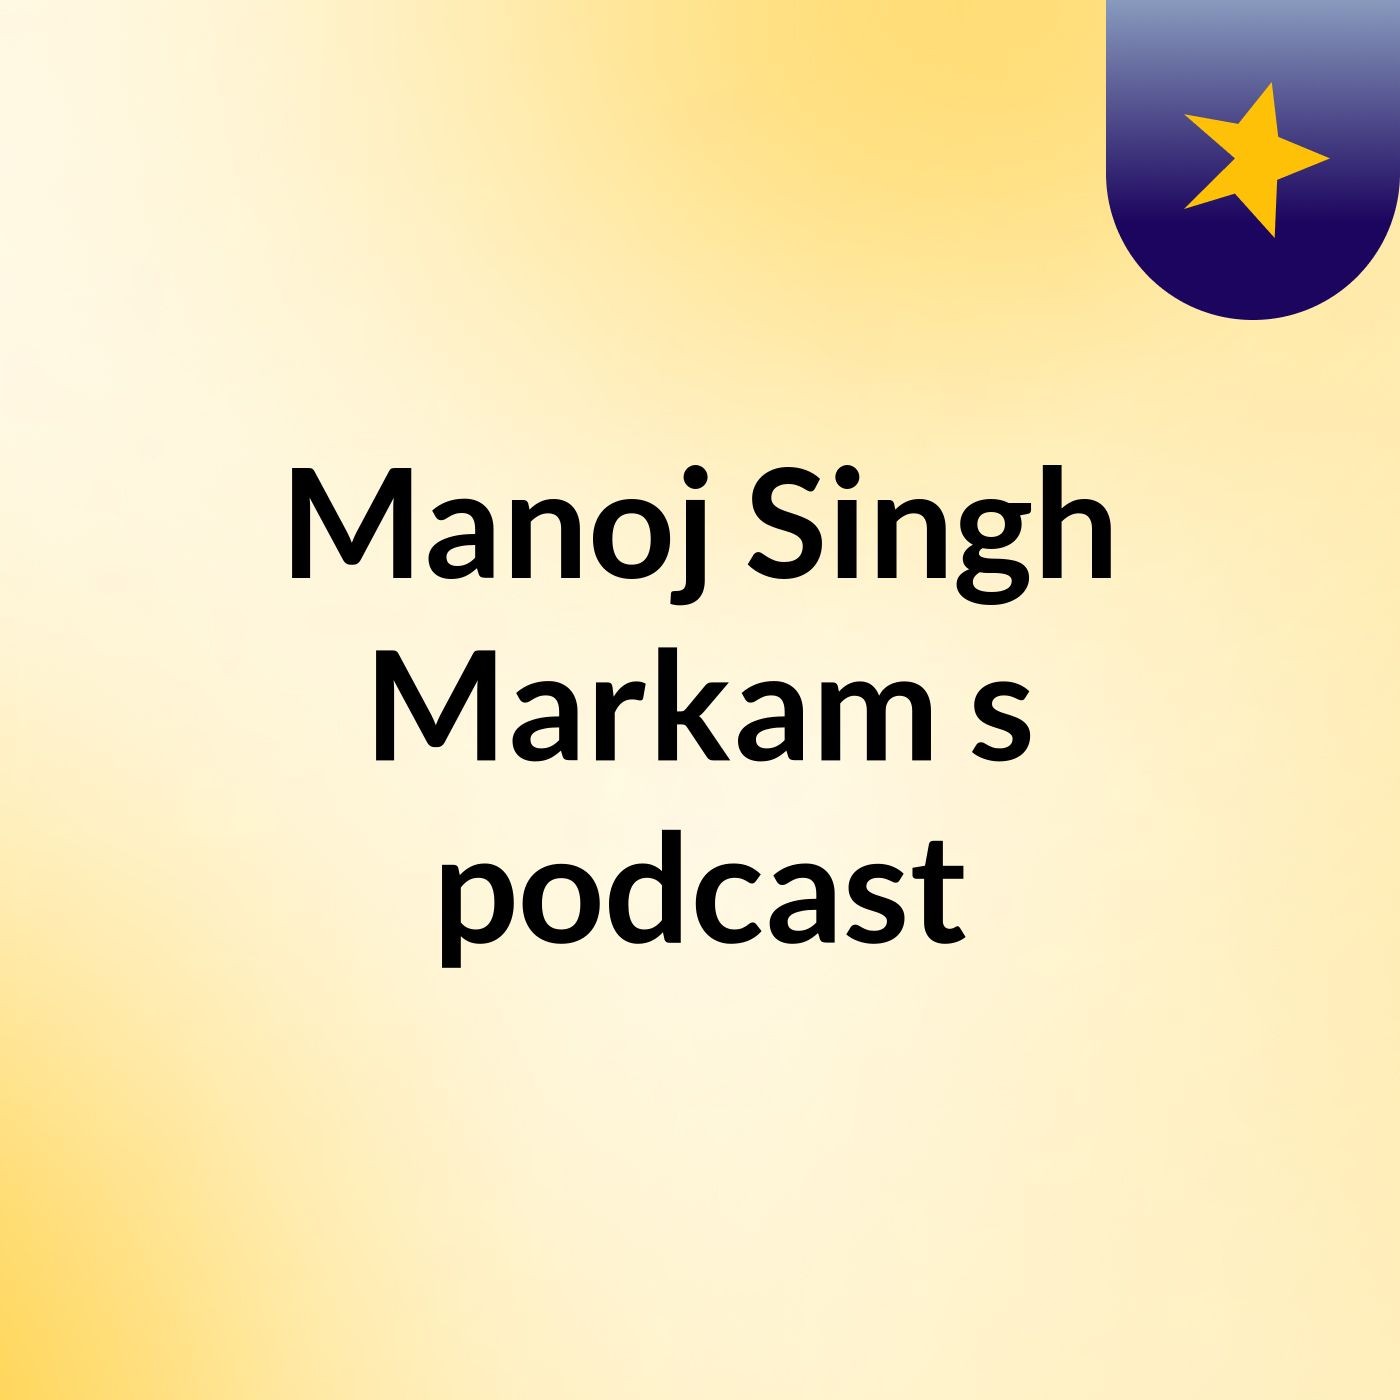 Episode 3 - Manoj Singh Markam's podcast